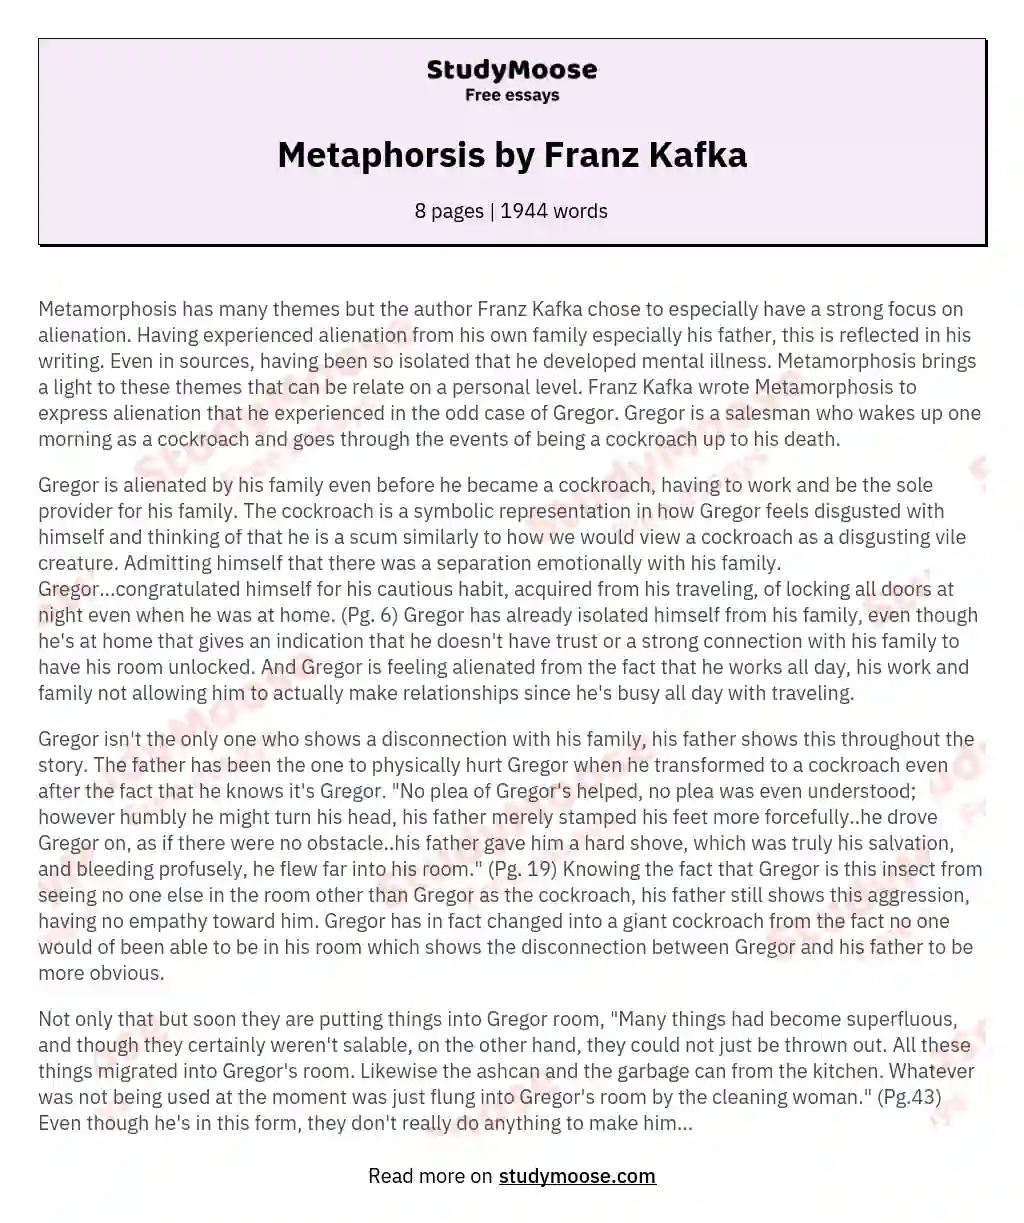 Metaphorsis by Franz Kafka essay